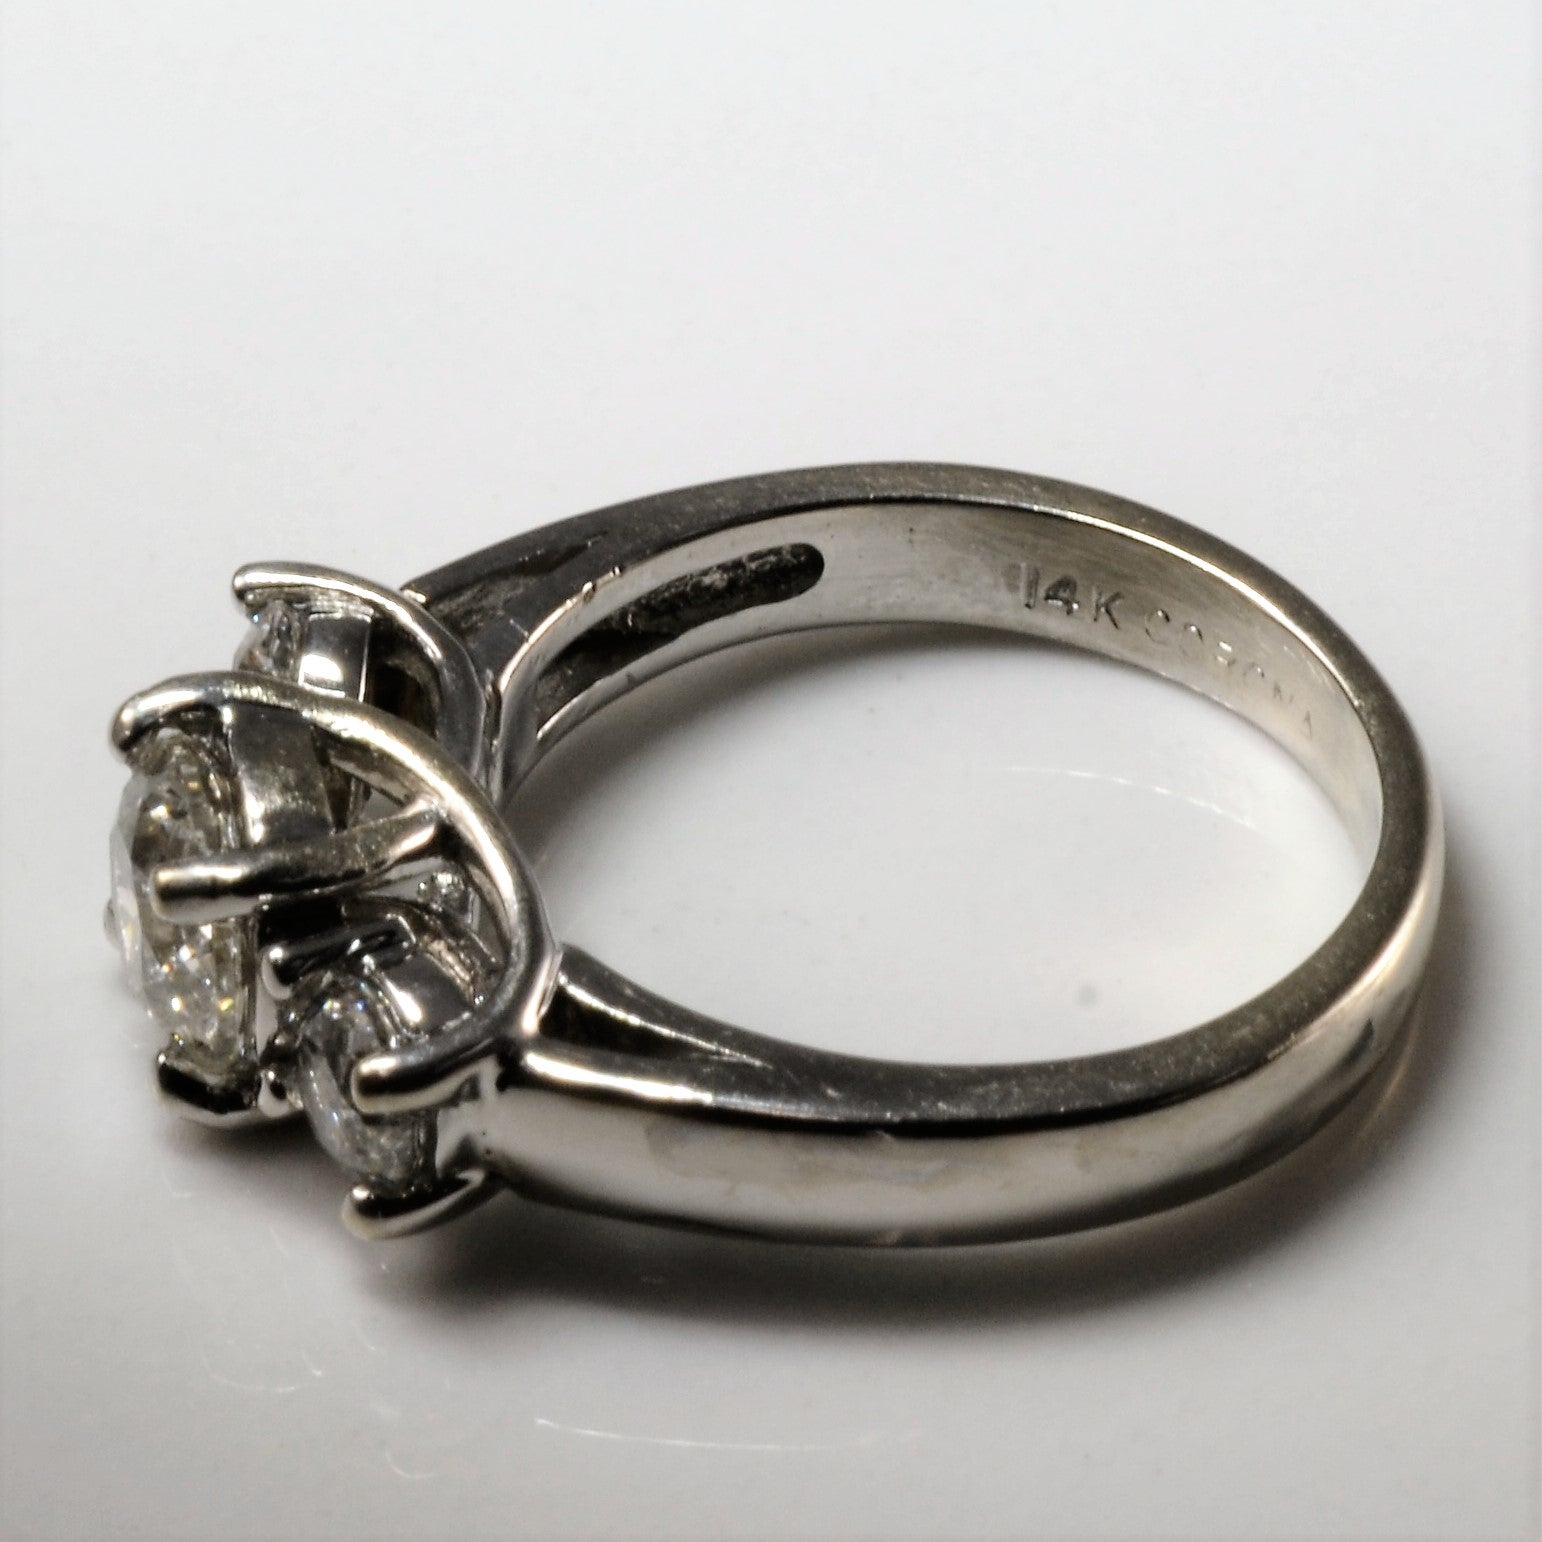 Three Stone Diamond Engagement Ring | 1.48ctw | SZ 5.75 |